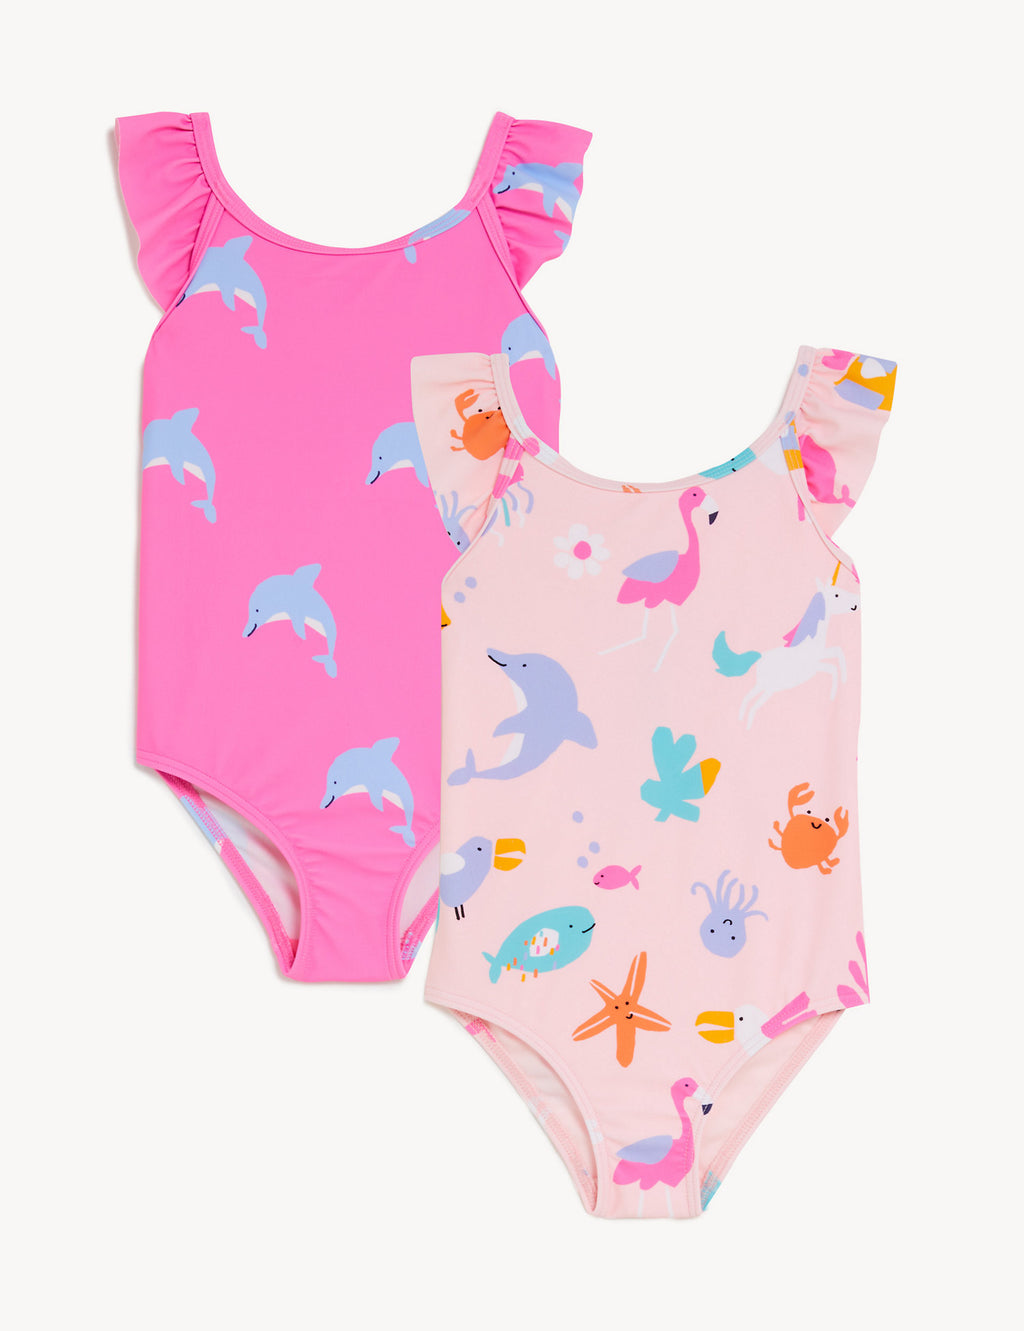 Swimwear for girls - Animal print swimsuits- Animal printed swimming costume – Printed swimming costumes for girls